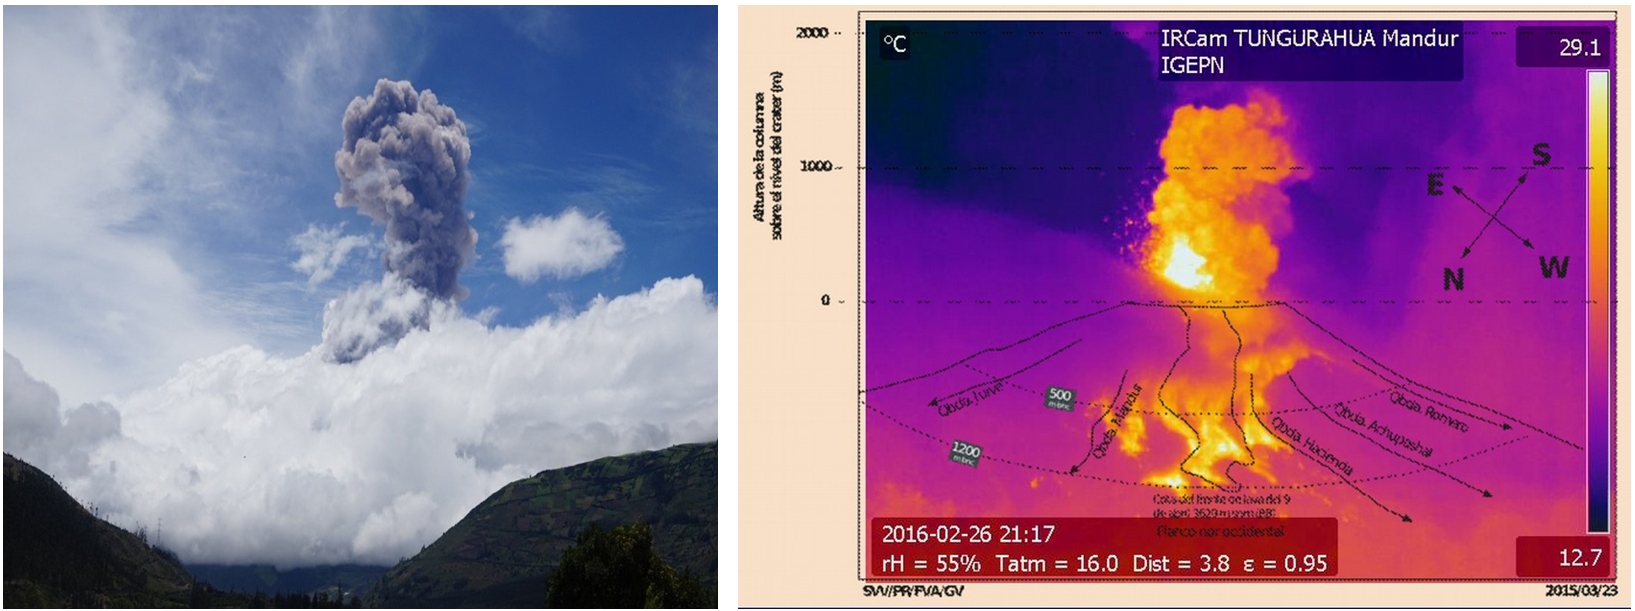 Erupción de febrero-marzo 2016 del volcán Tungurahua